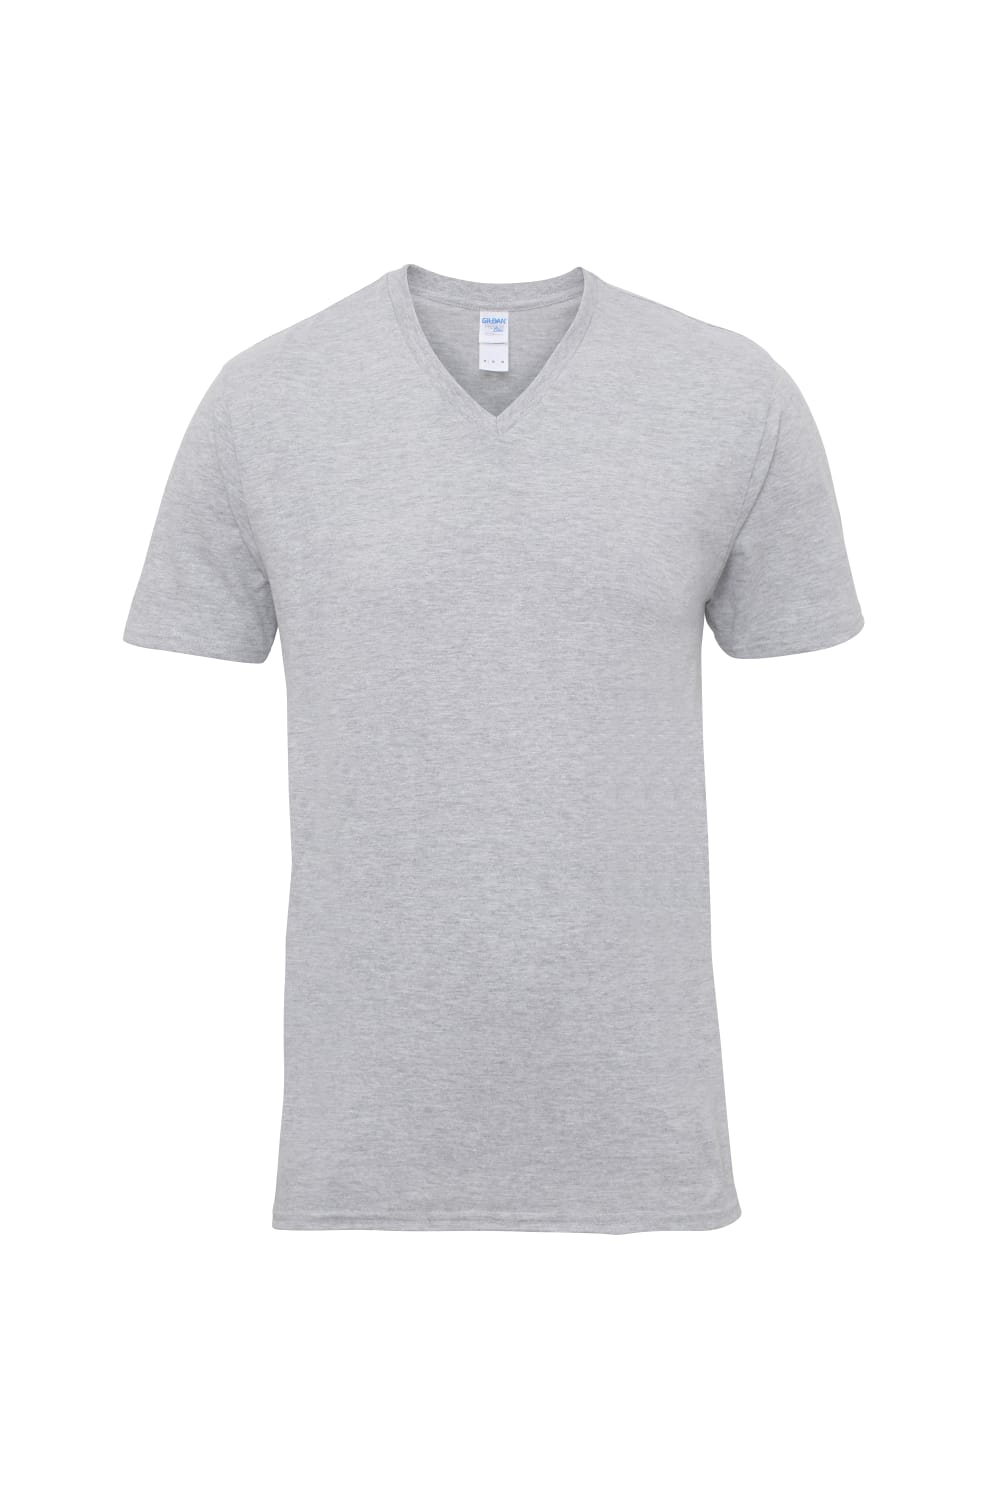 Gildan Mens Premium Cotton V Neck Short Sleeve T-Shirt (Sport Grey)